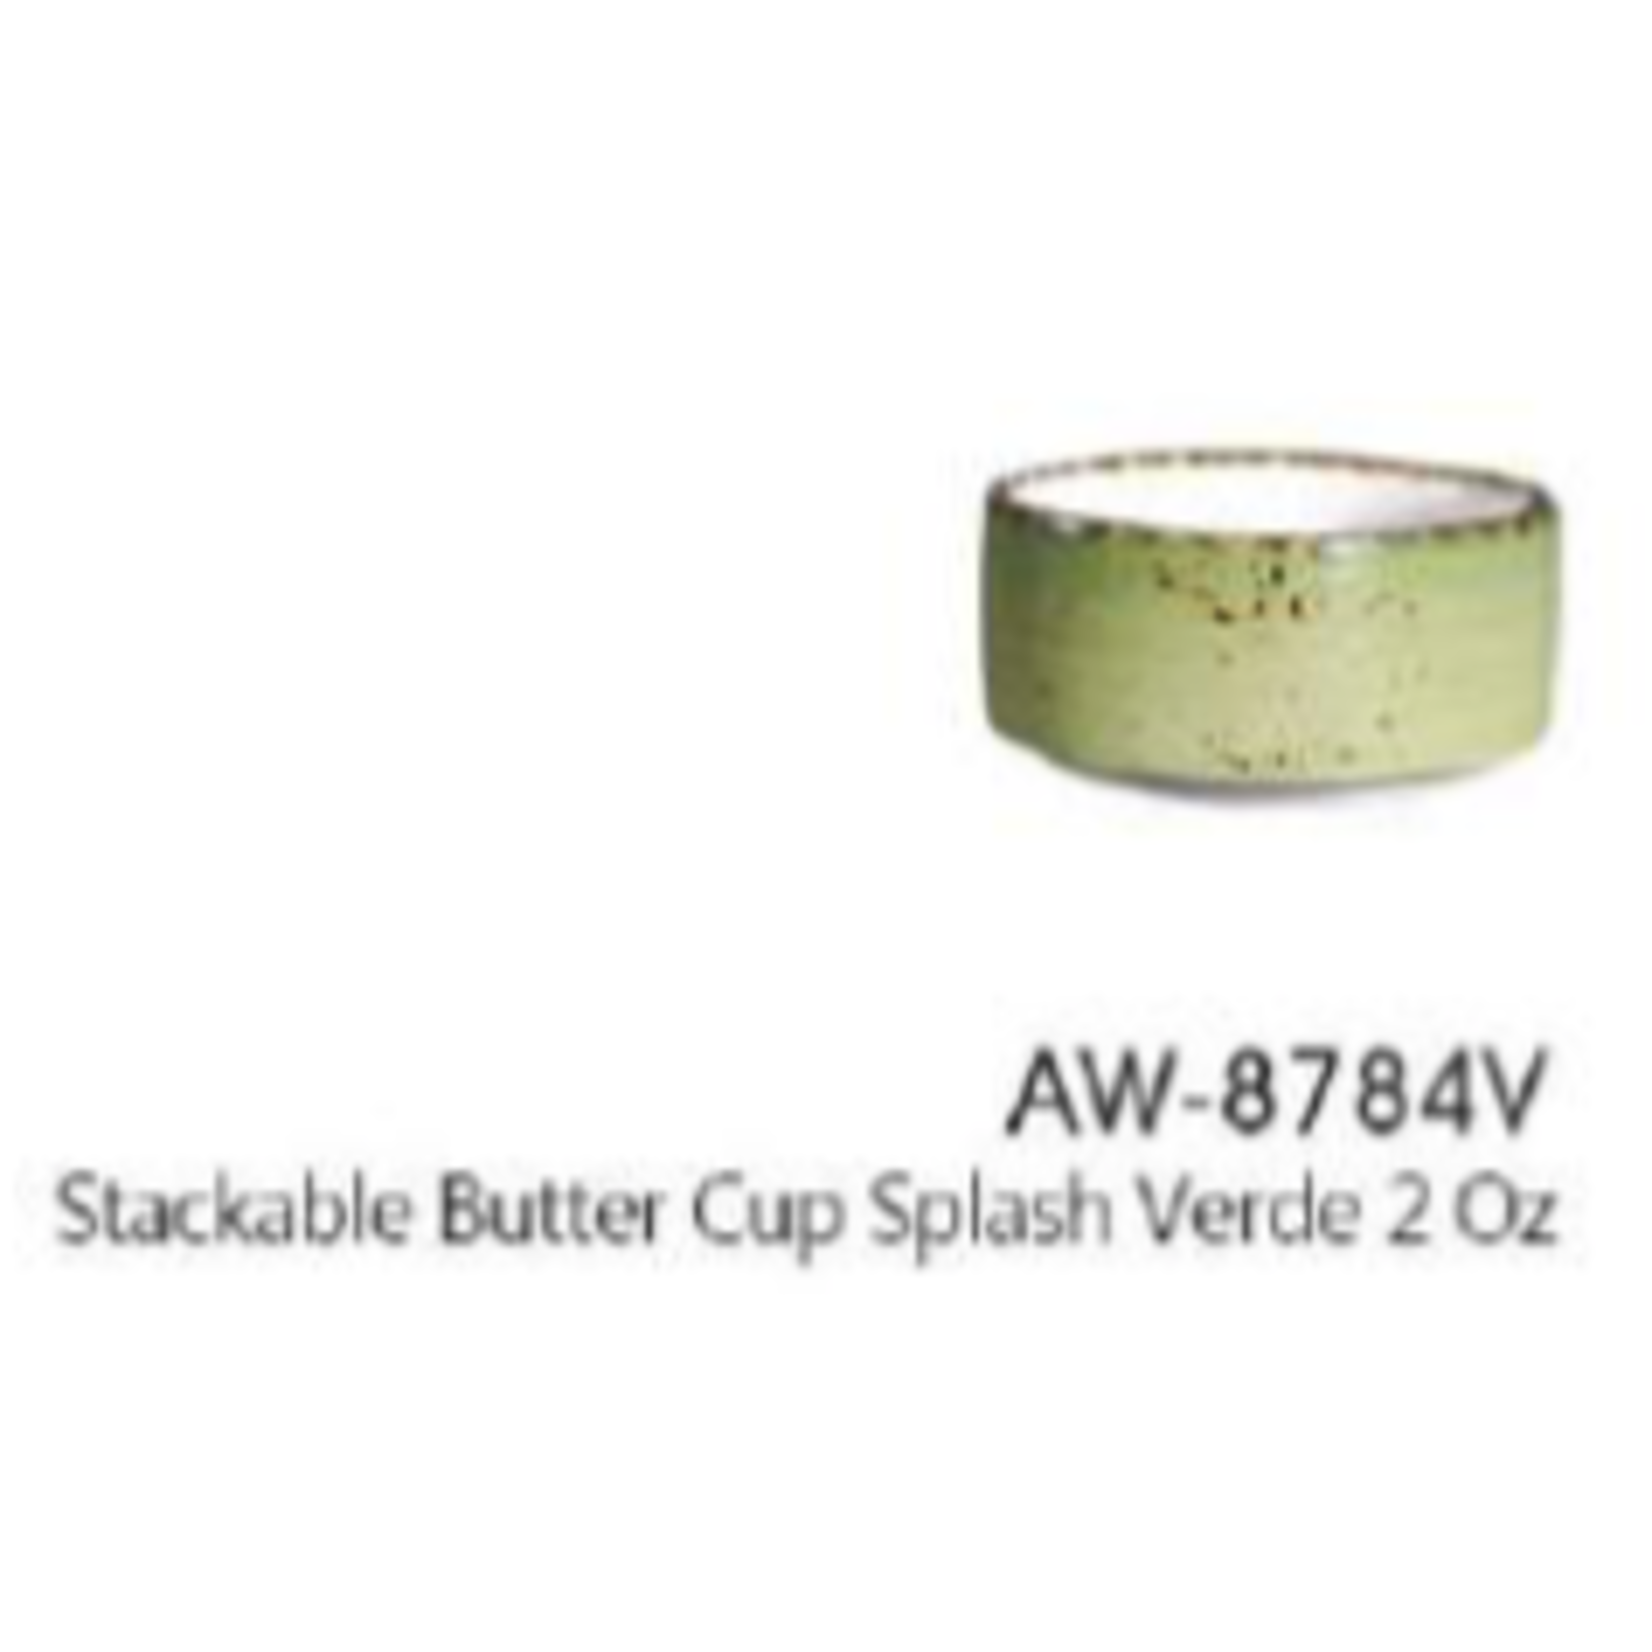 UNIVERSAL ENTERPRISES, INC. AW-8784V 2 oz stackable butter cup splash Green 48/cs